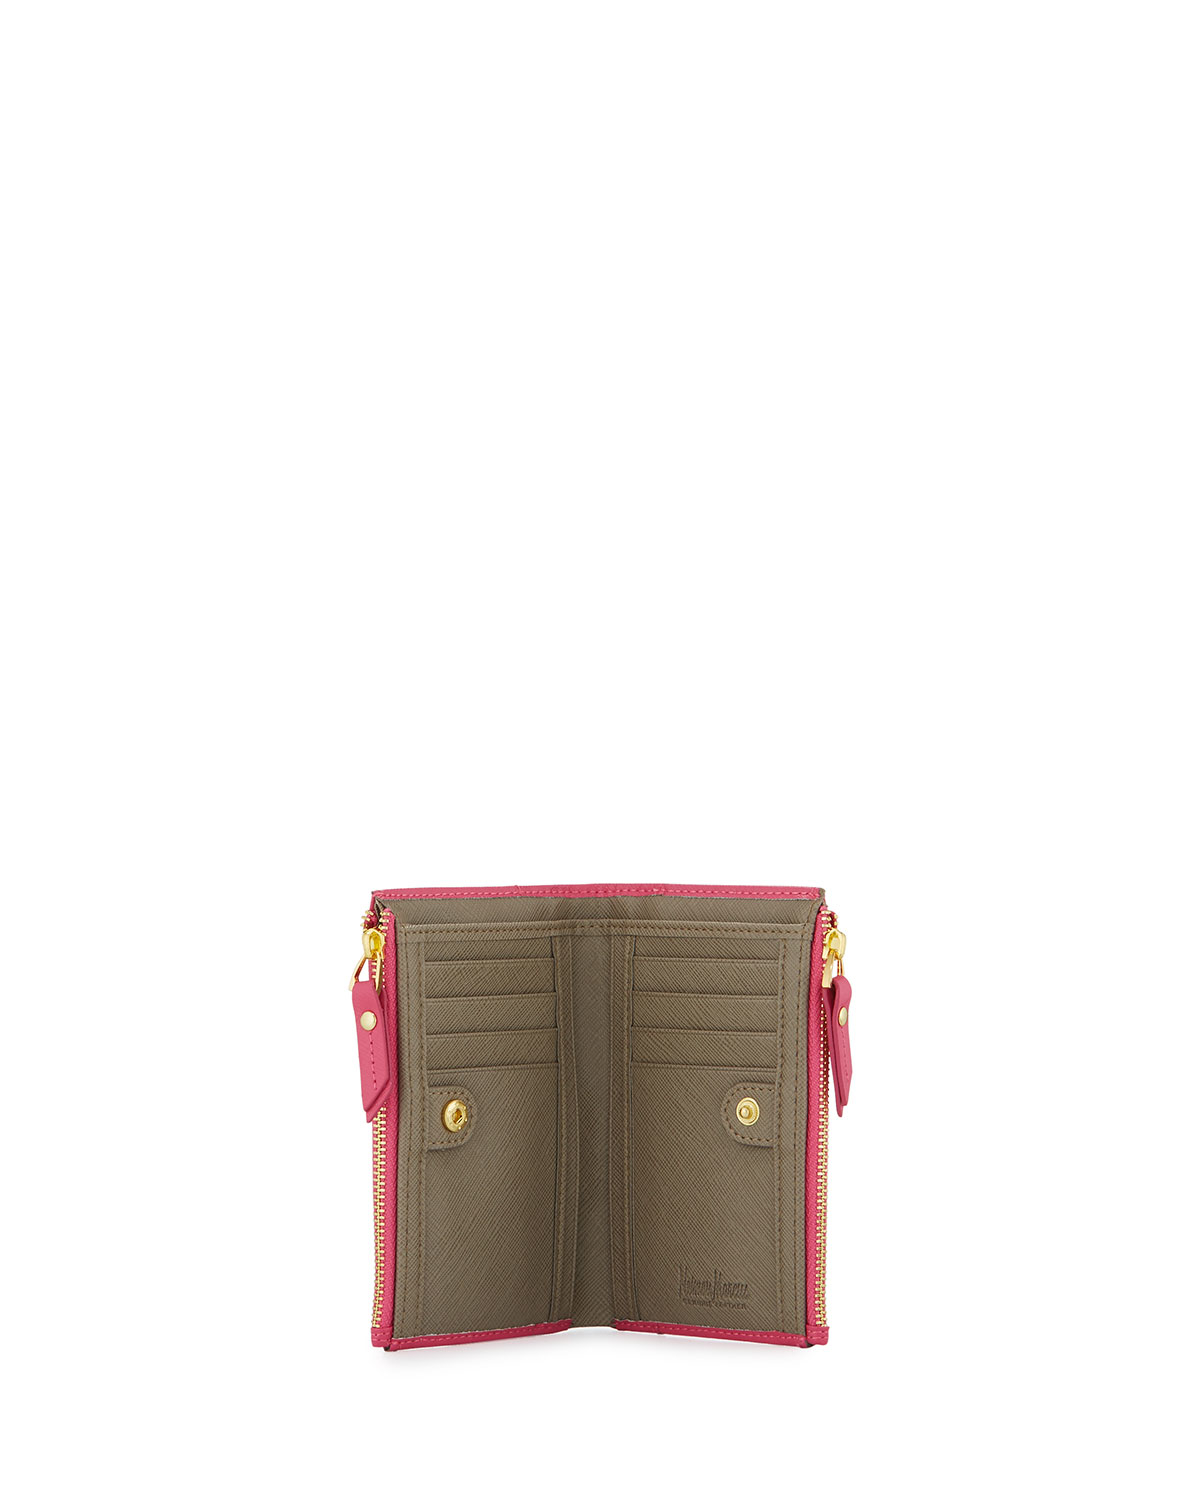 Neiman marcus Saffiano Leather Double-zip Wallet in Pink | Lyst